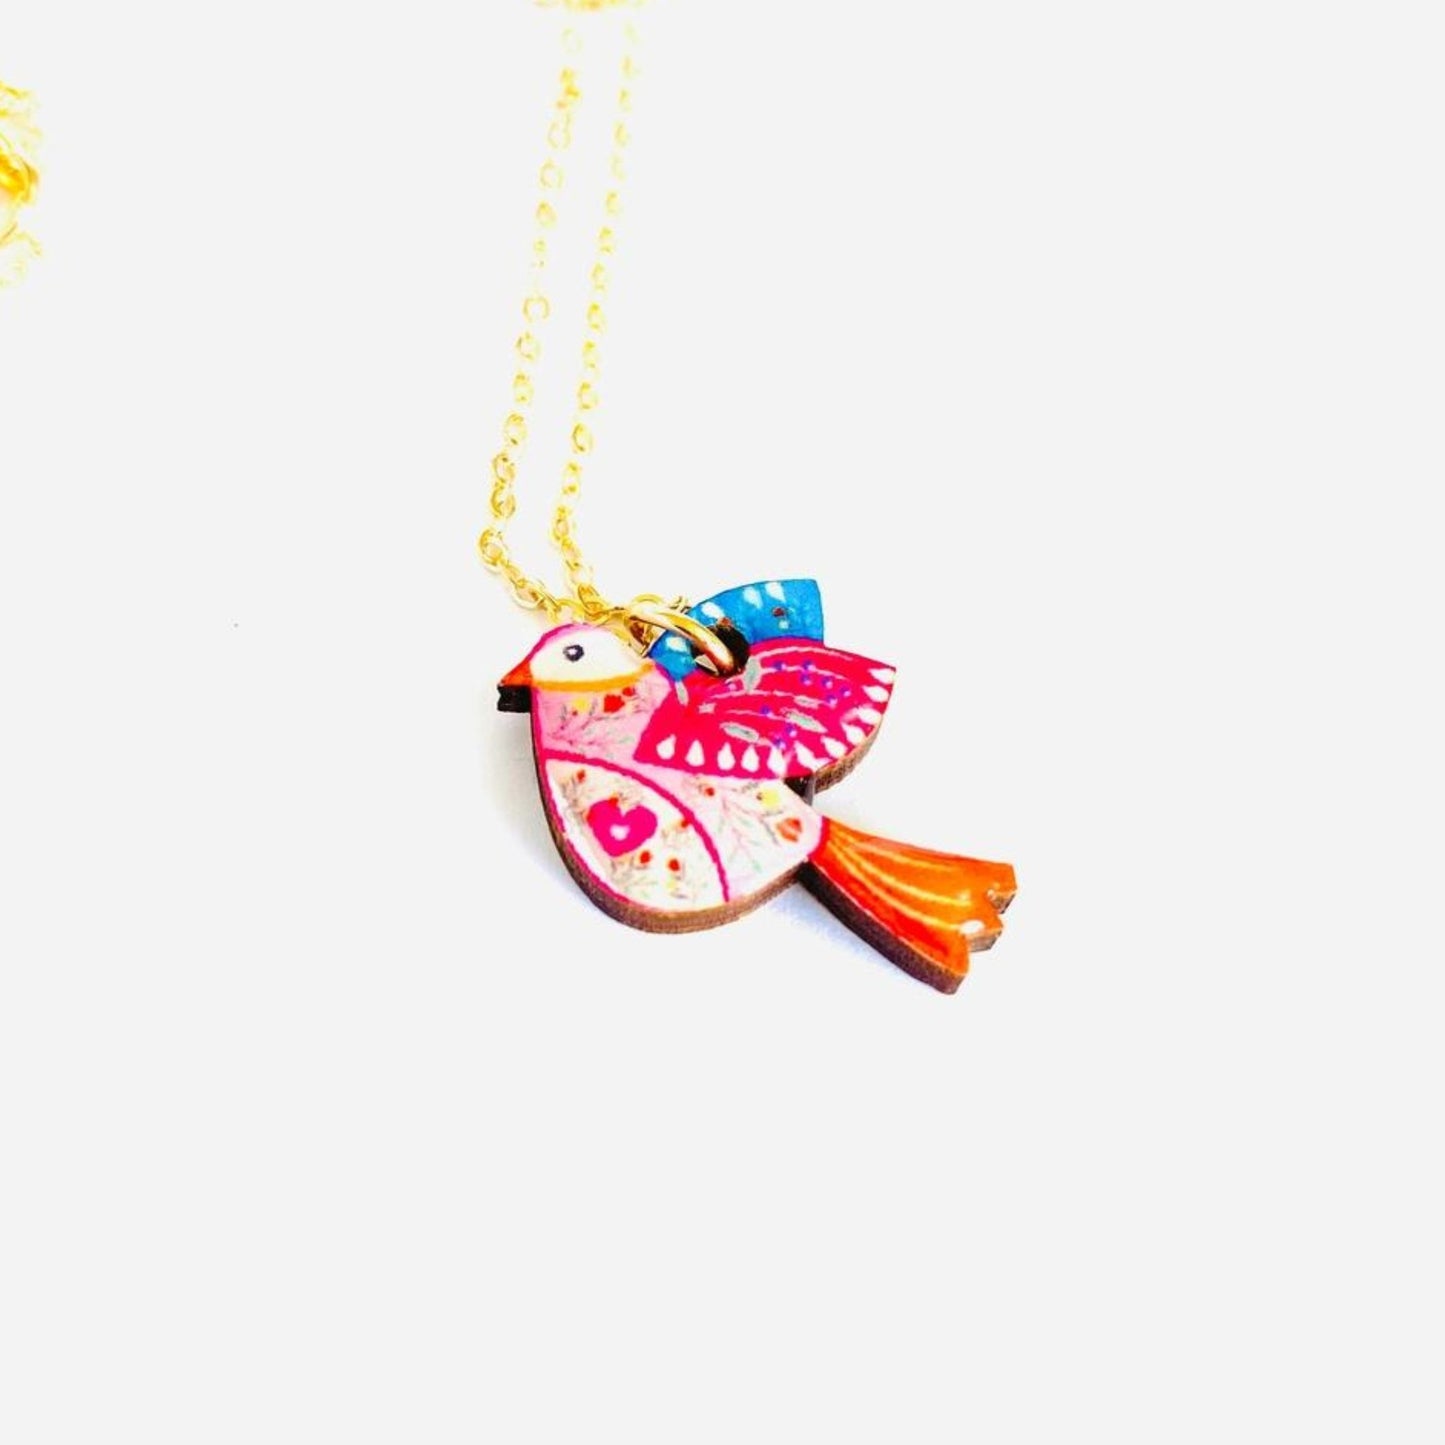 Dainty Bird Necklace - The Little Jewellery Company